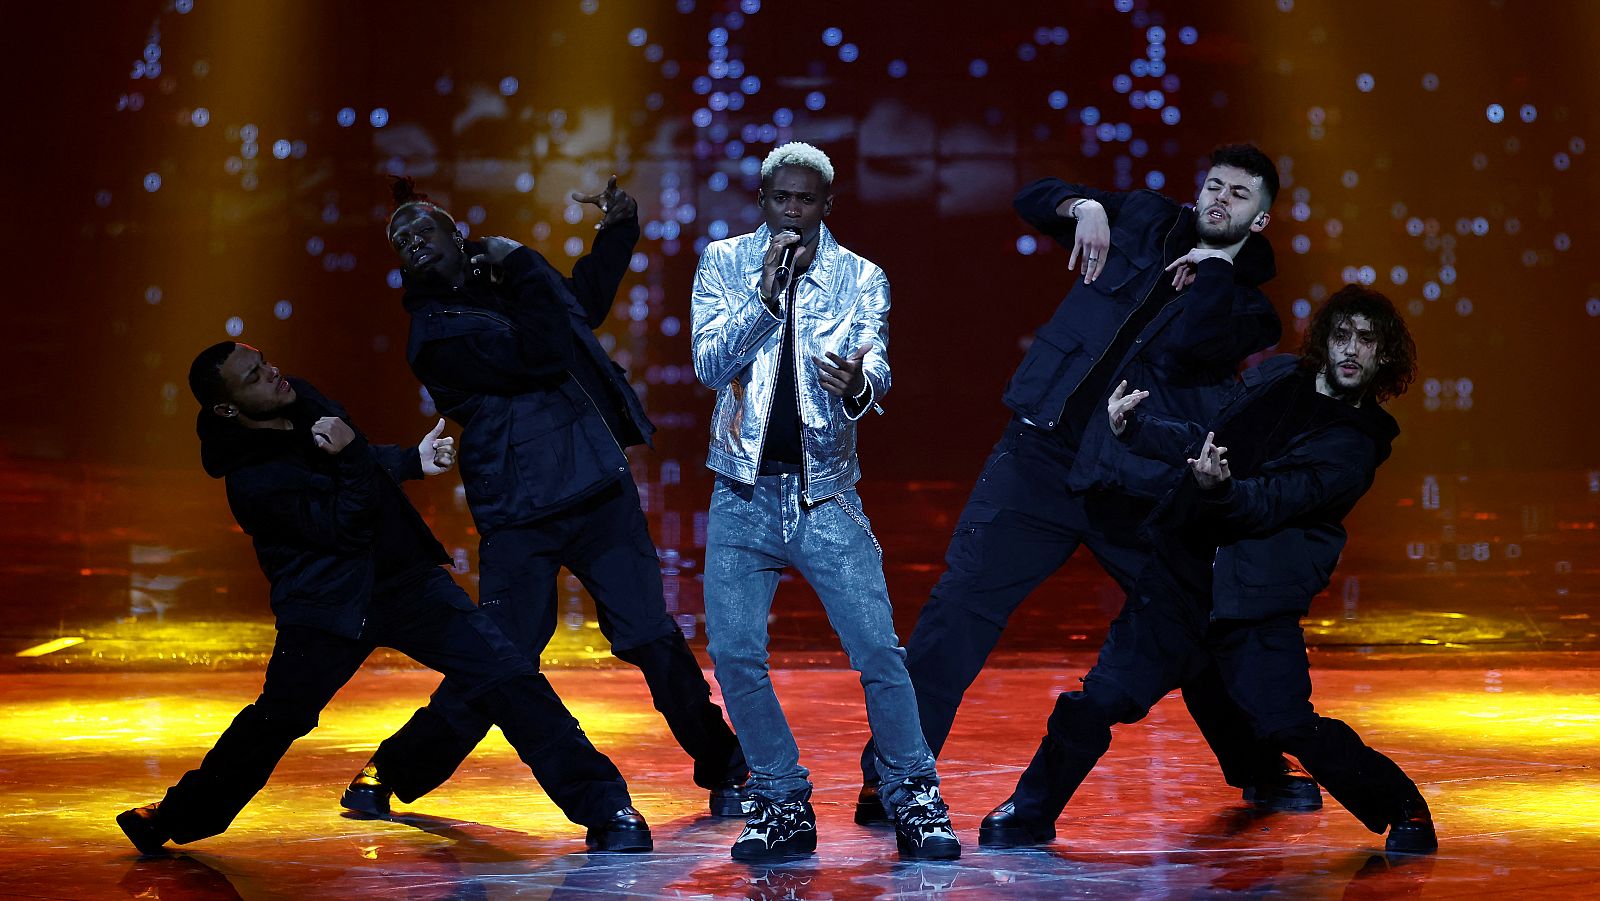 Eurovisión 2022 - Bélgica: Jérémie Makiese canta "Miss You" en la semifinal 2 